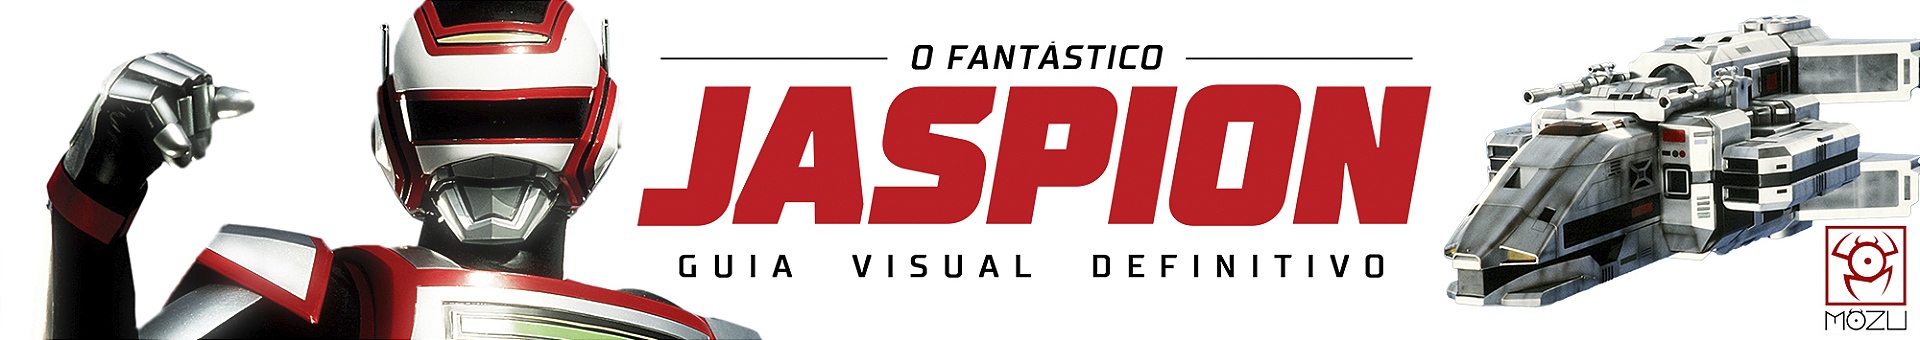 Jaspion Guia Visual Definitivo - full banner